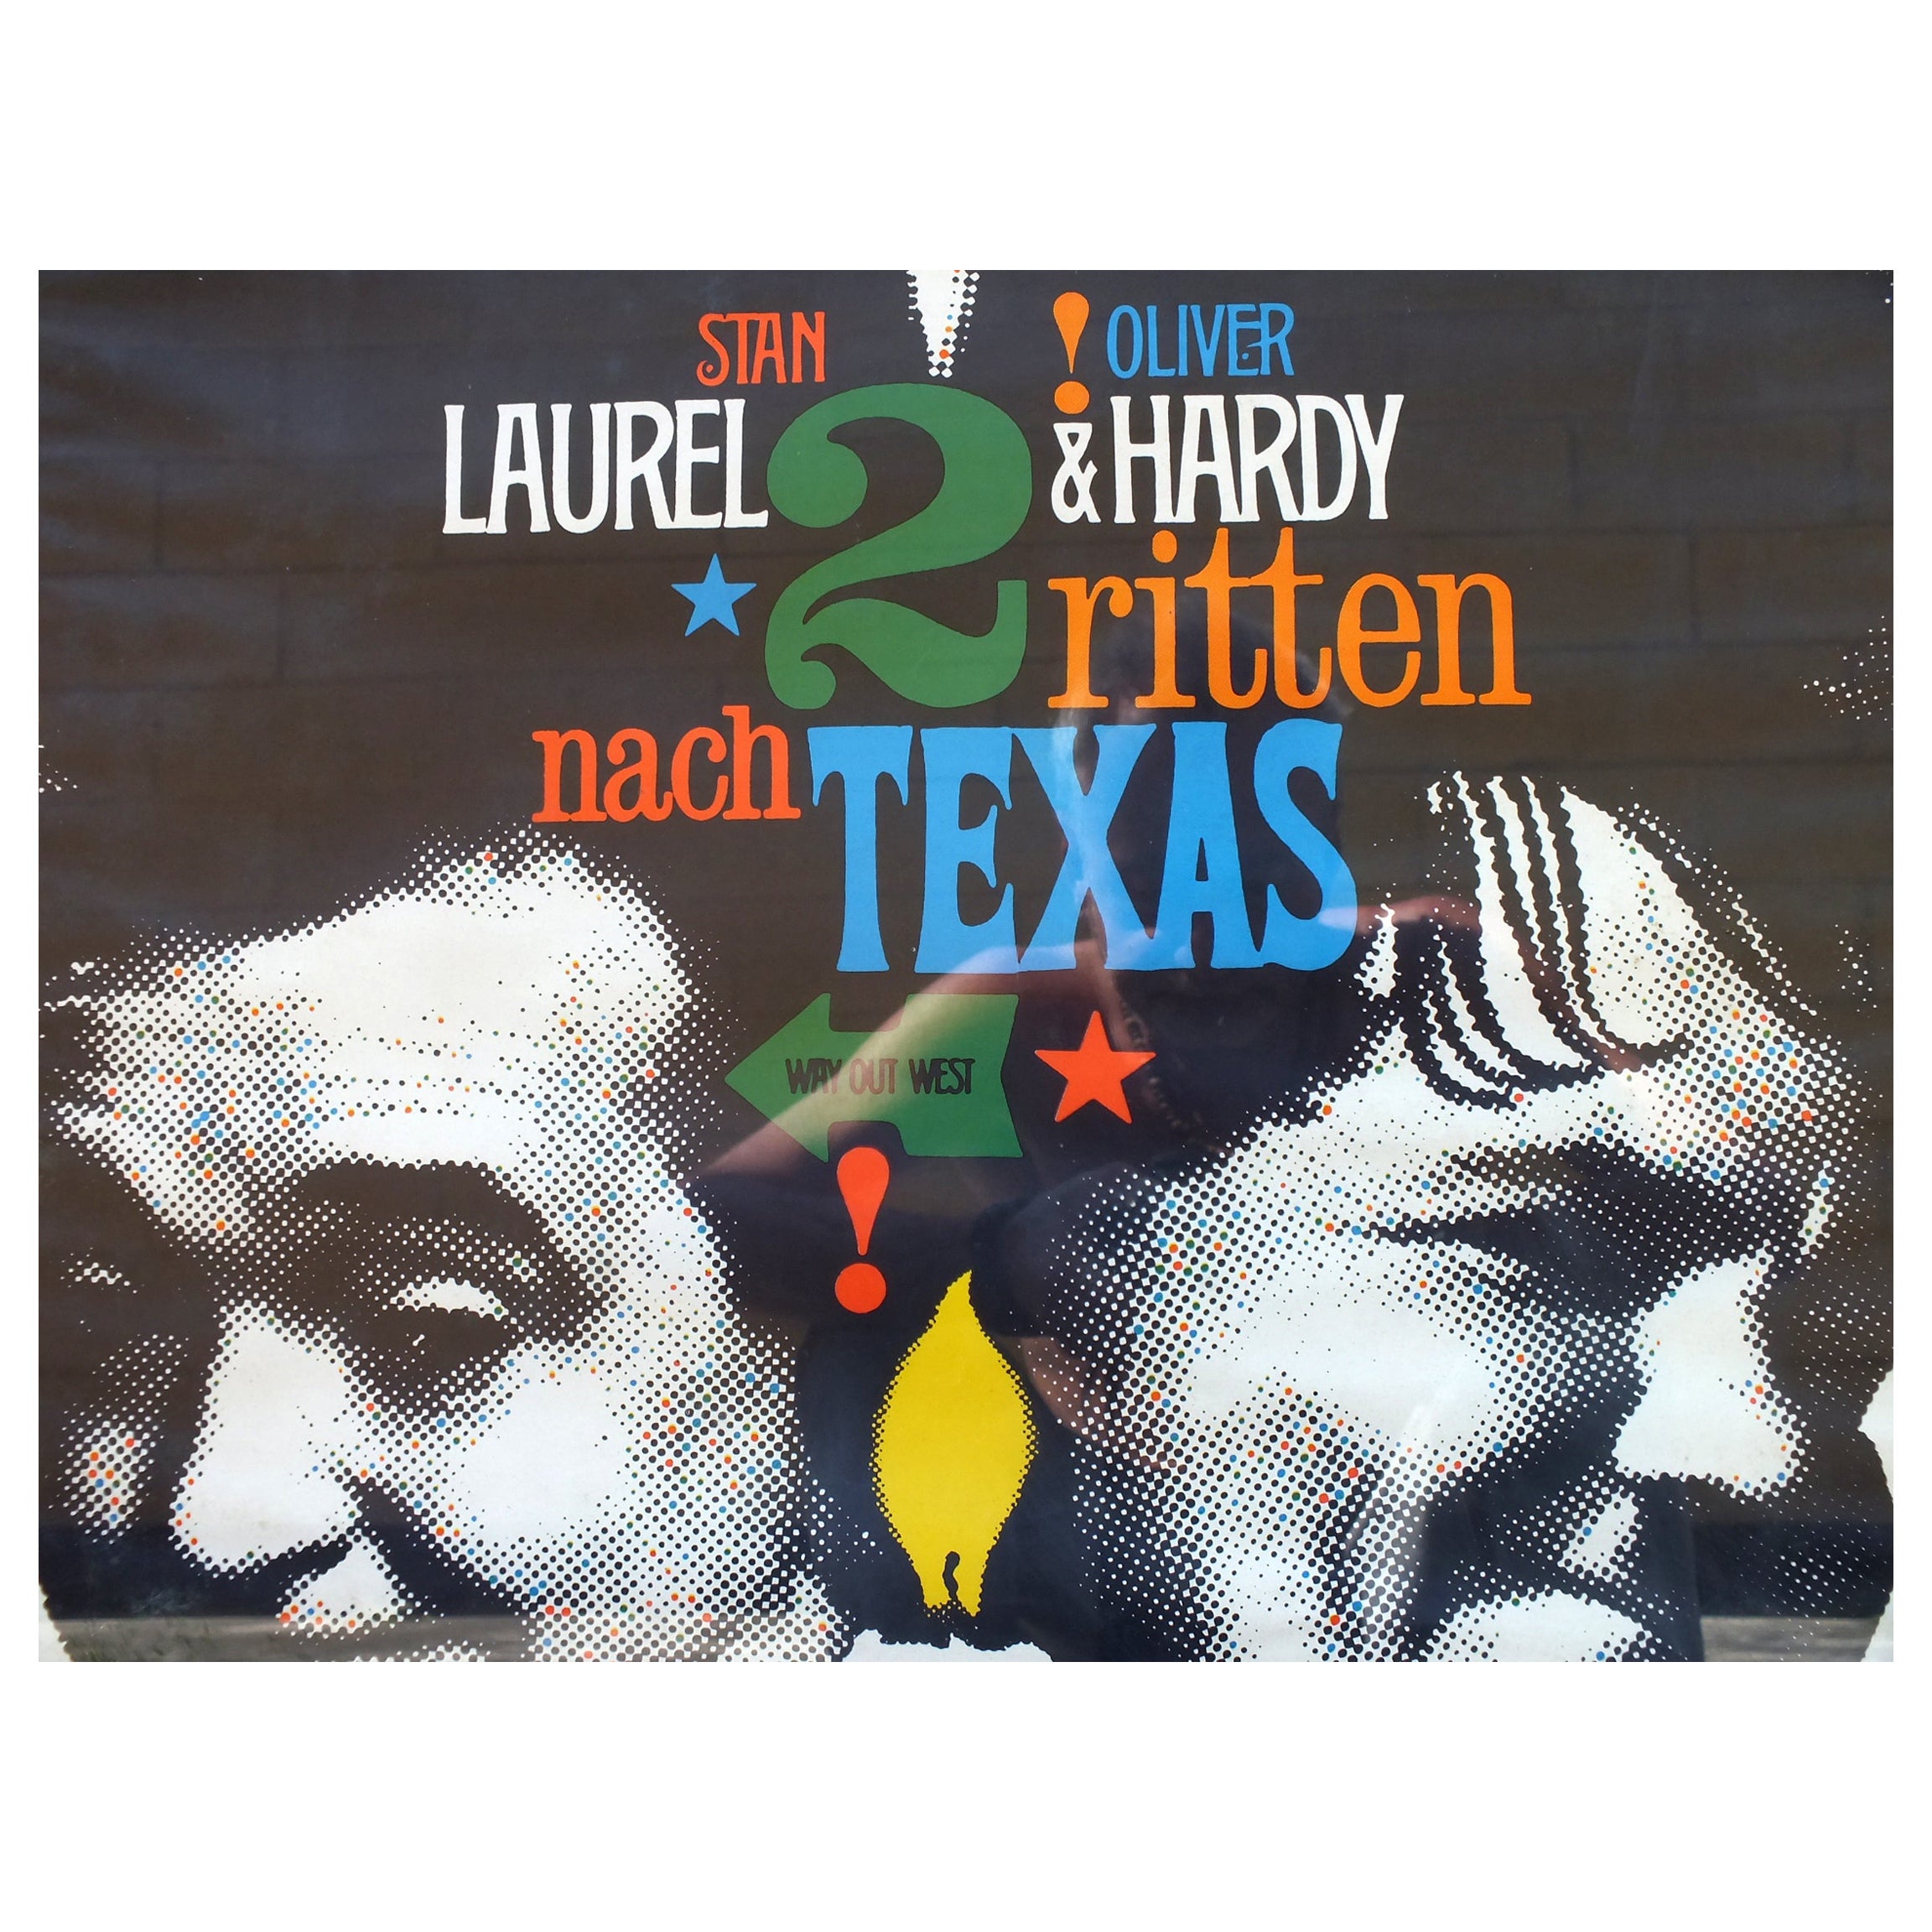  Laurel&Oliver Hardy 2 ritten nach texas/Way Out West Gunther Kieser '60 movie en vente